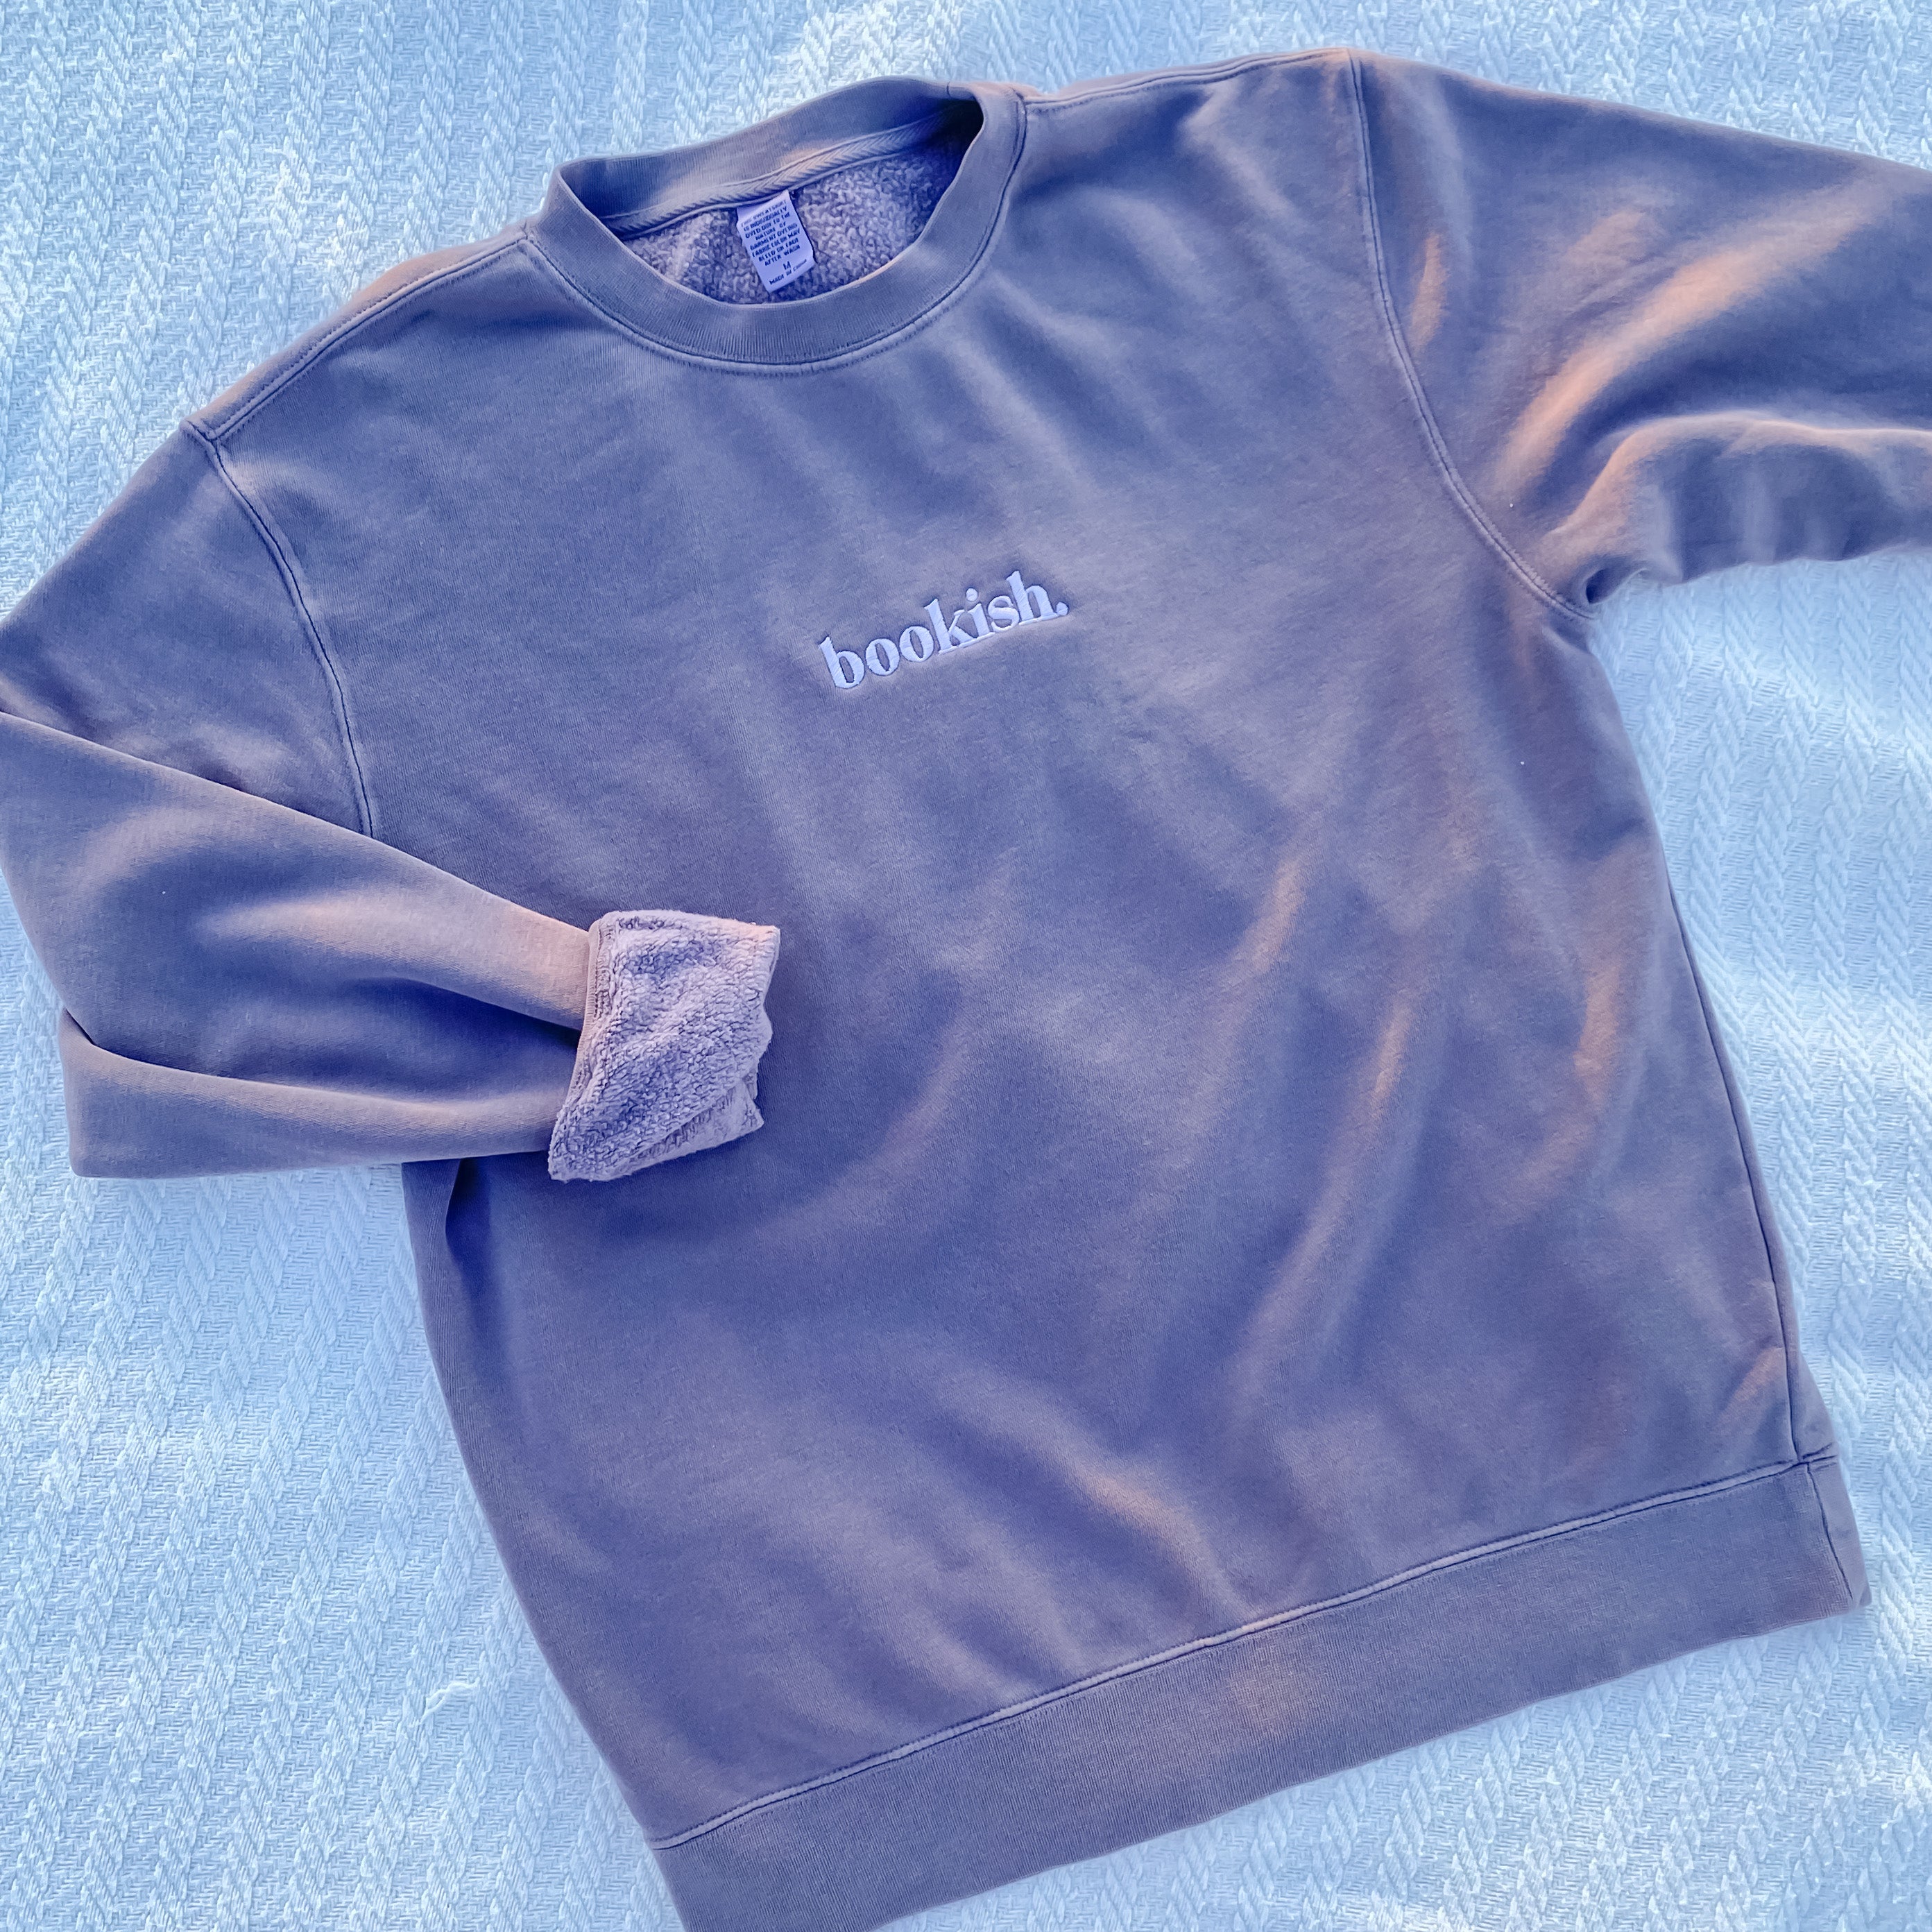 Bookish. Embroidered Sweatshirt - Plum – The Bookish Goods